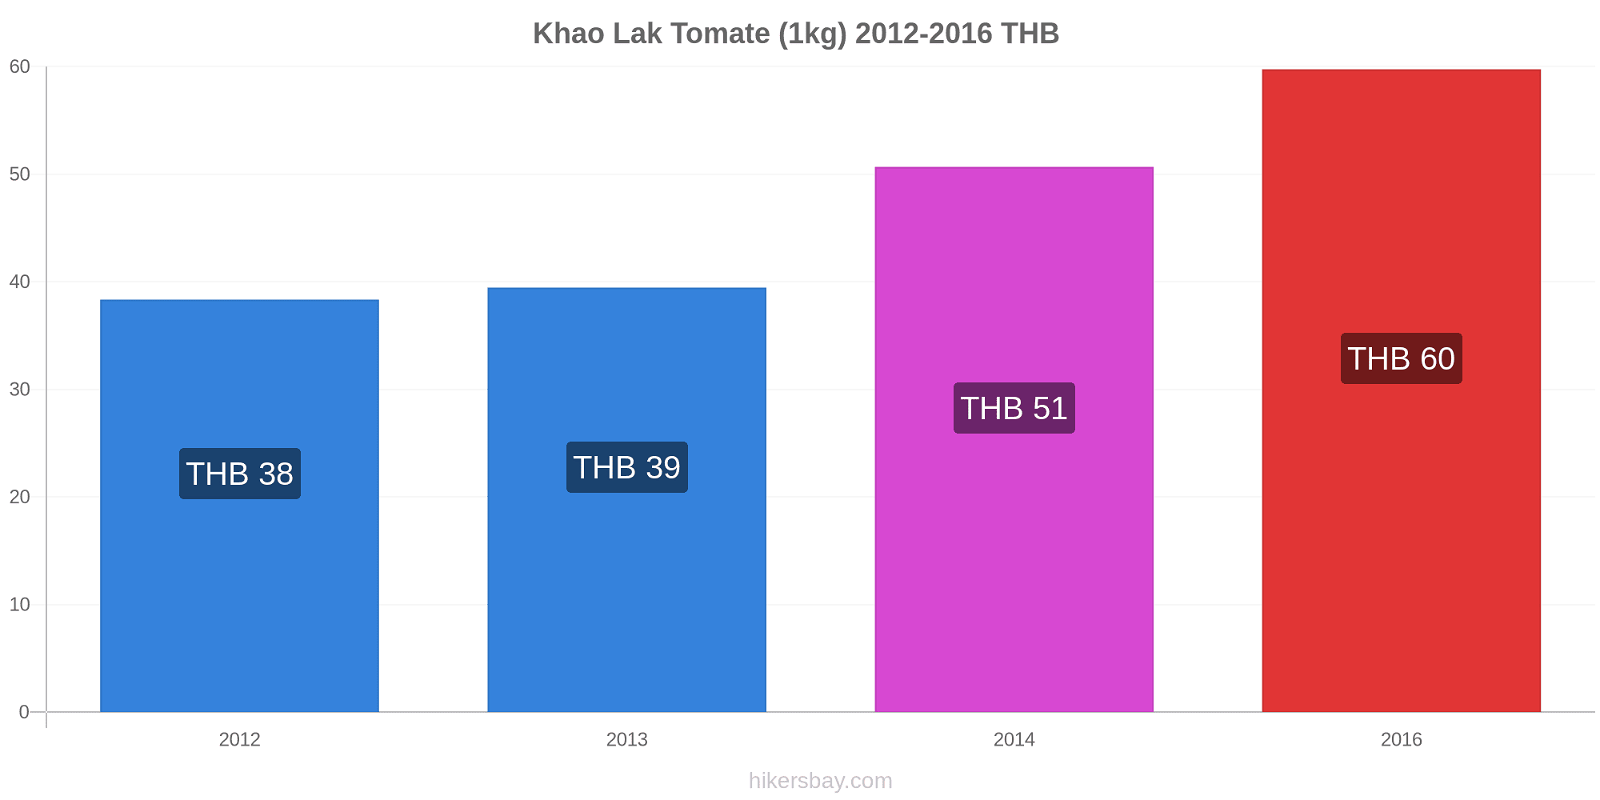 Khao Lak changements de prix Tomate (1kg) hikersbay.com